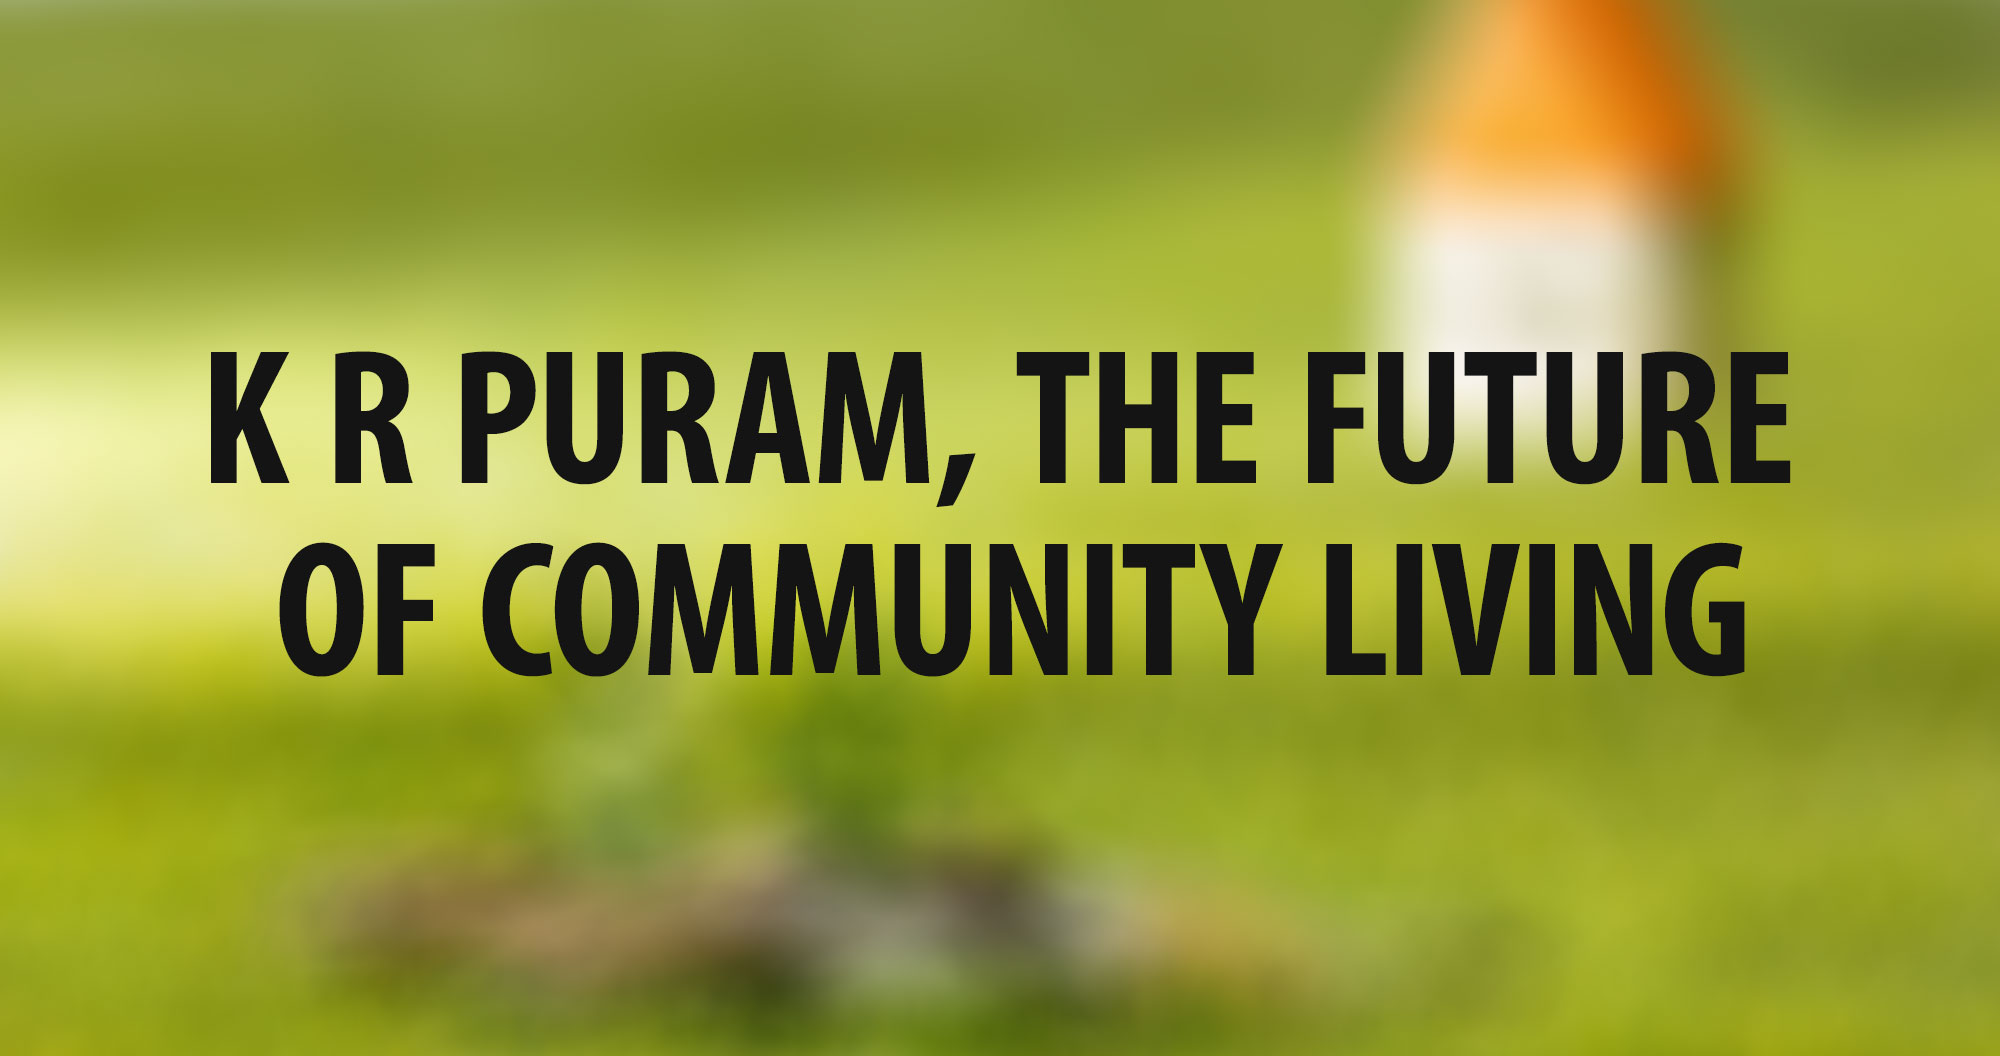 K R Puram, the future of community living